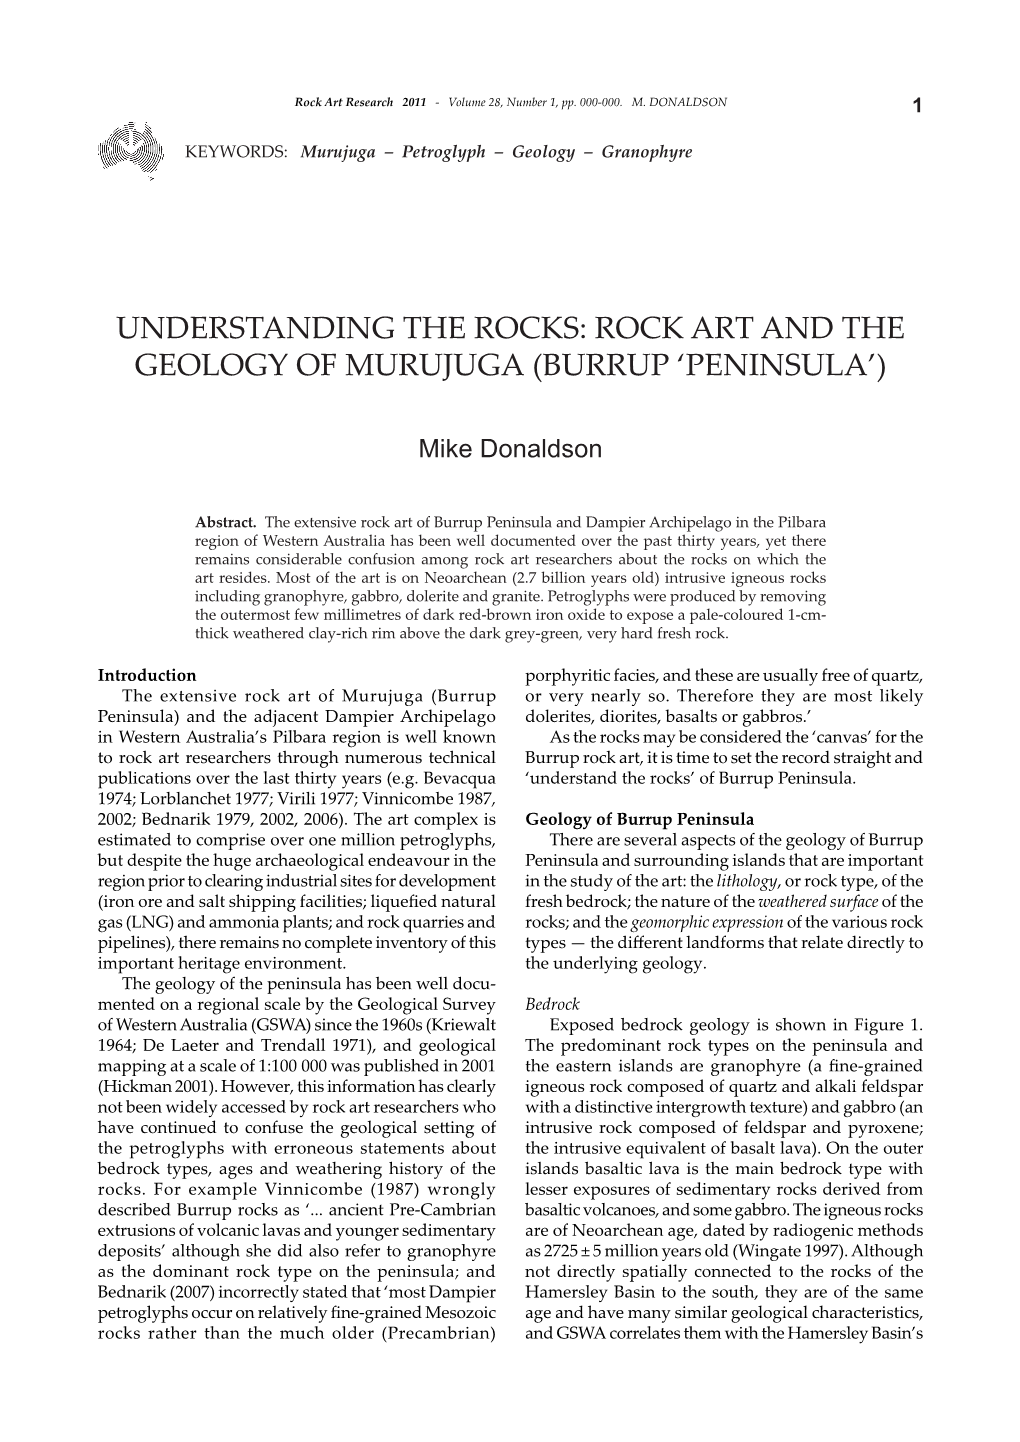 Understanding the Rocks: Rock Art and the Geology of Murujuga (Burrup 'Peninsula')